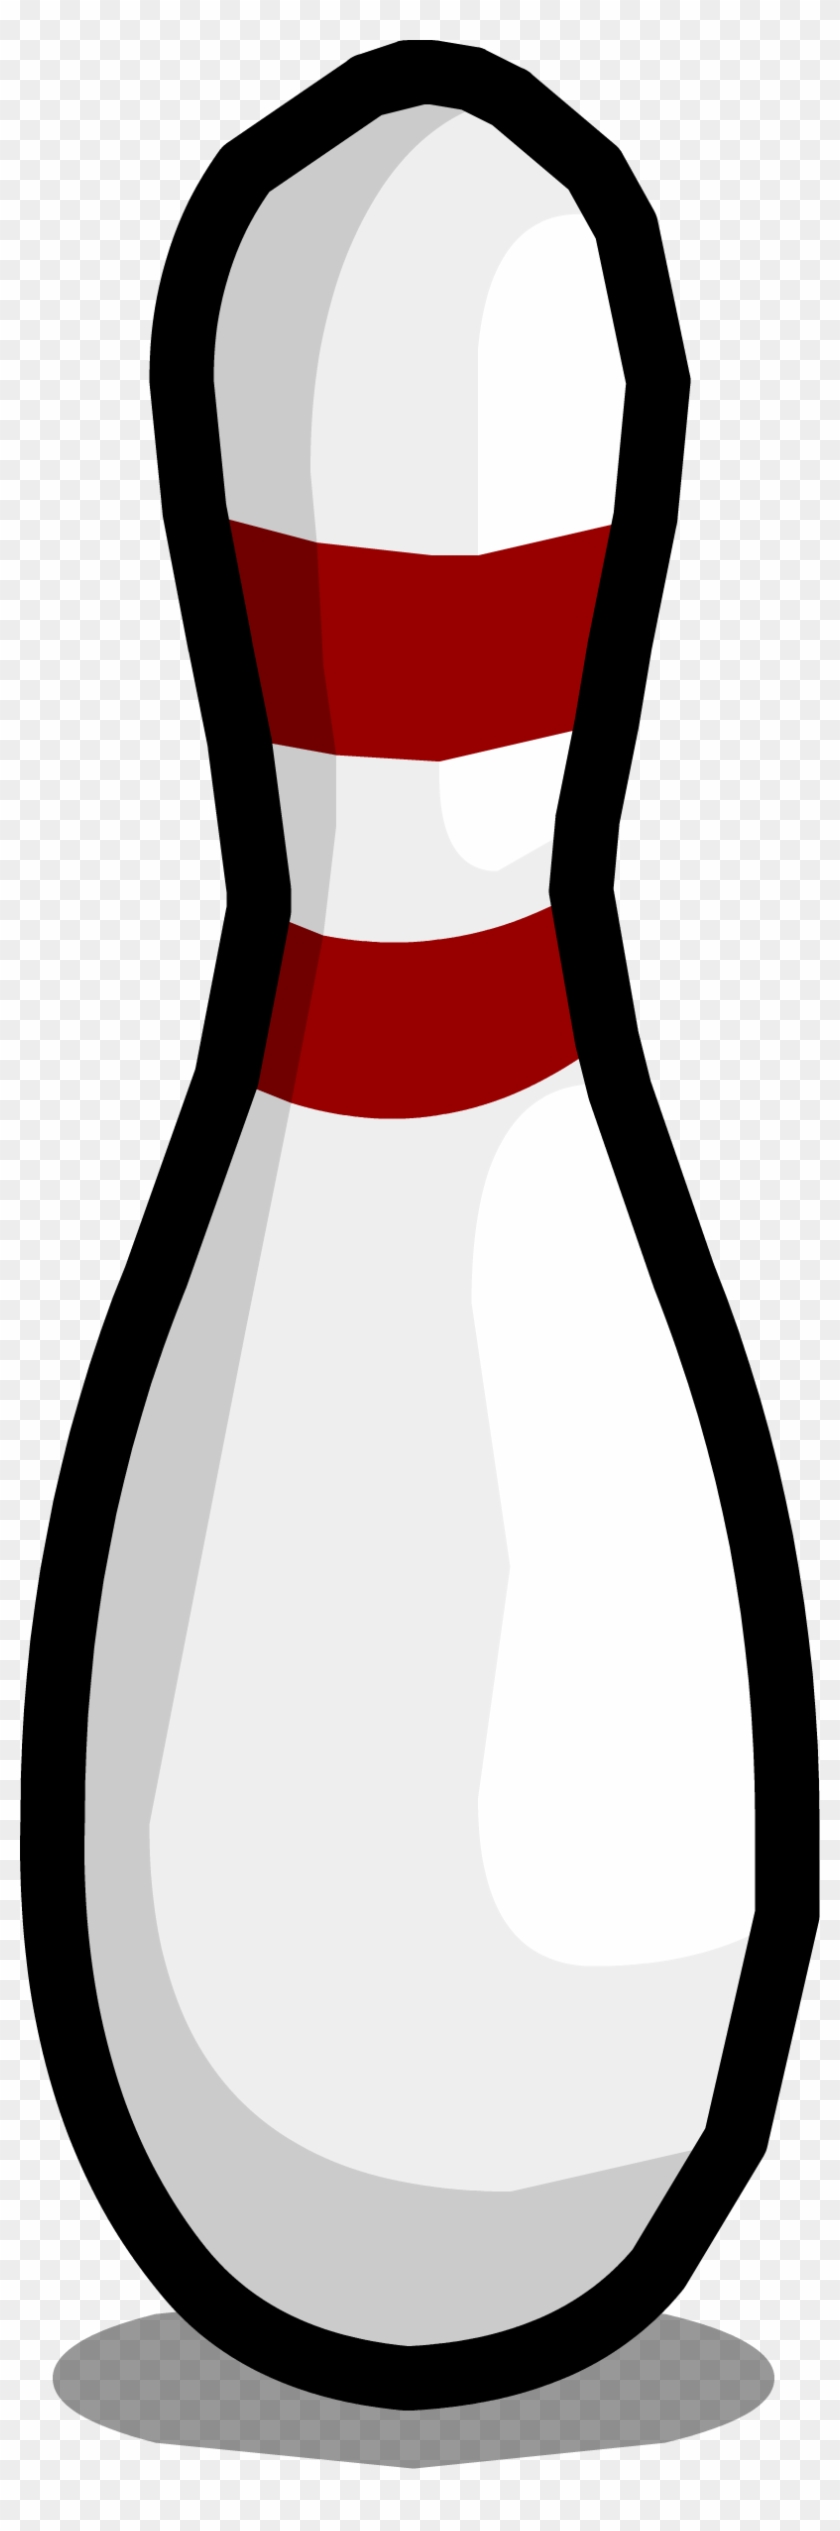 Club Penguin Wiki - Bowling Pin Sprite #94431